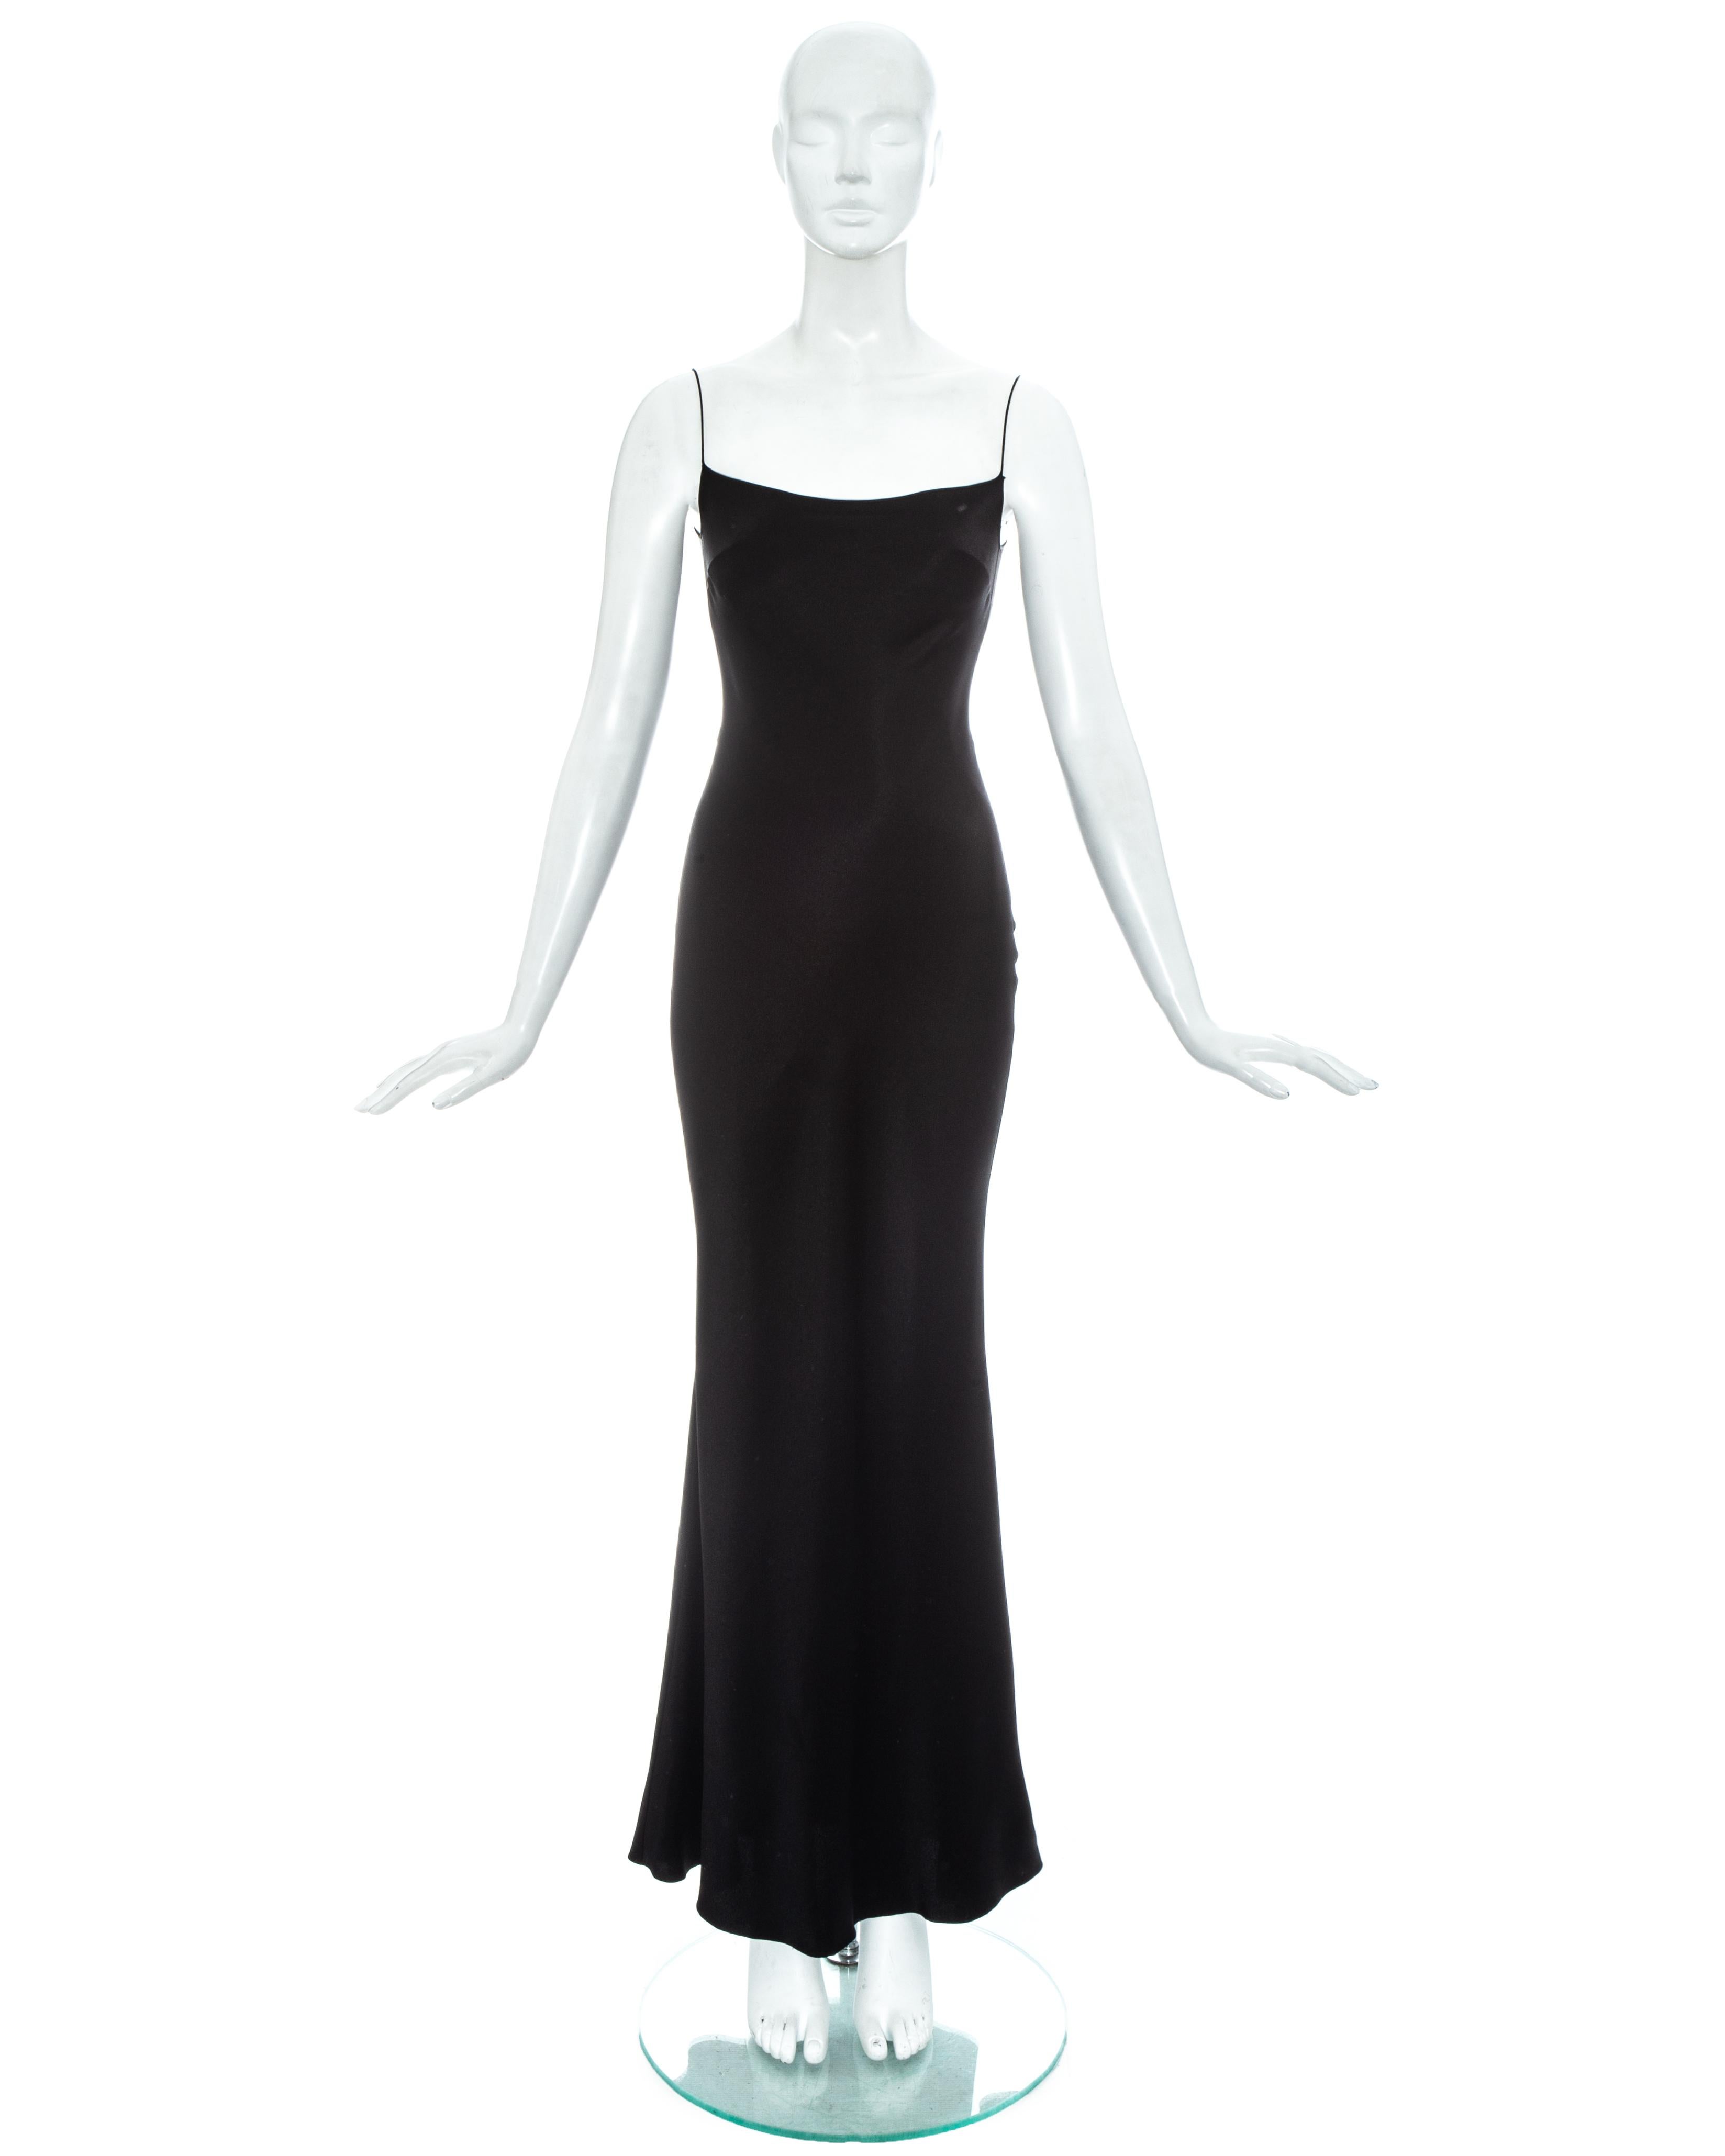 John Galliano black acetate evening slip dress with spaghetti straps and scoop neckline.

Spring-Summer 1997